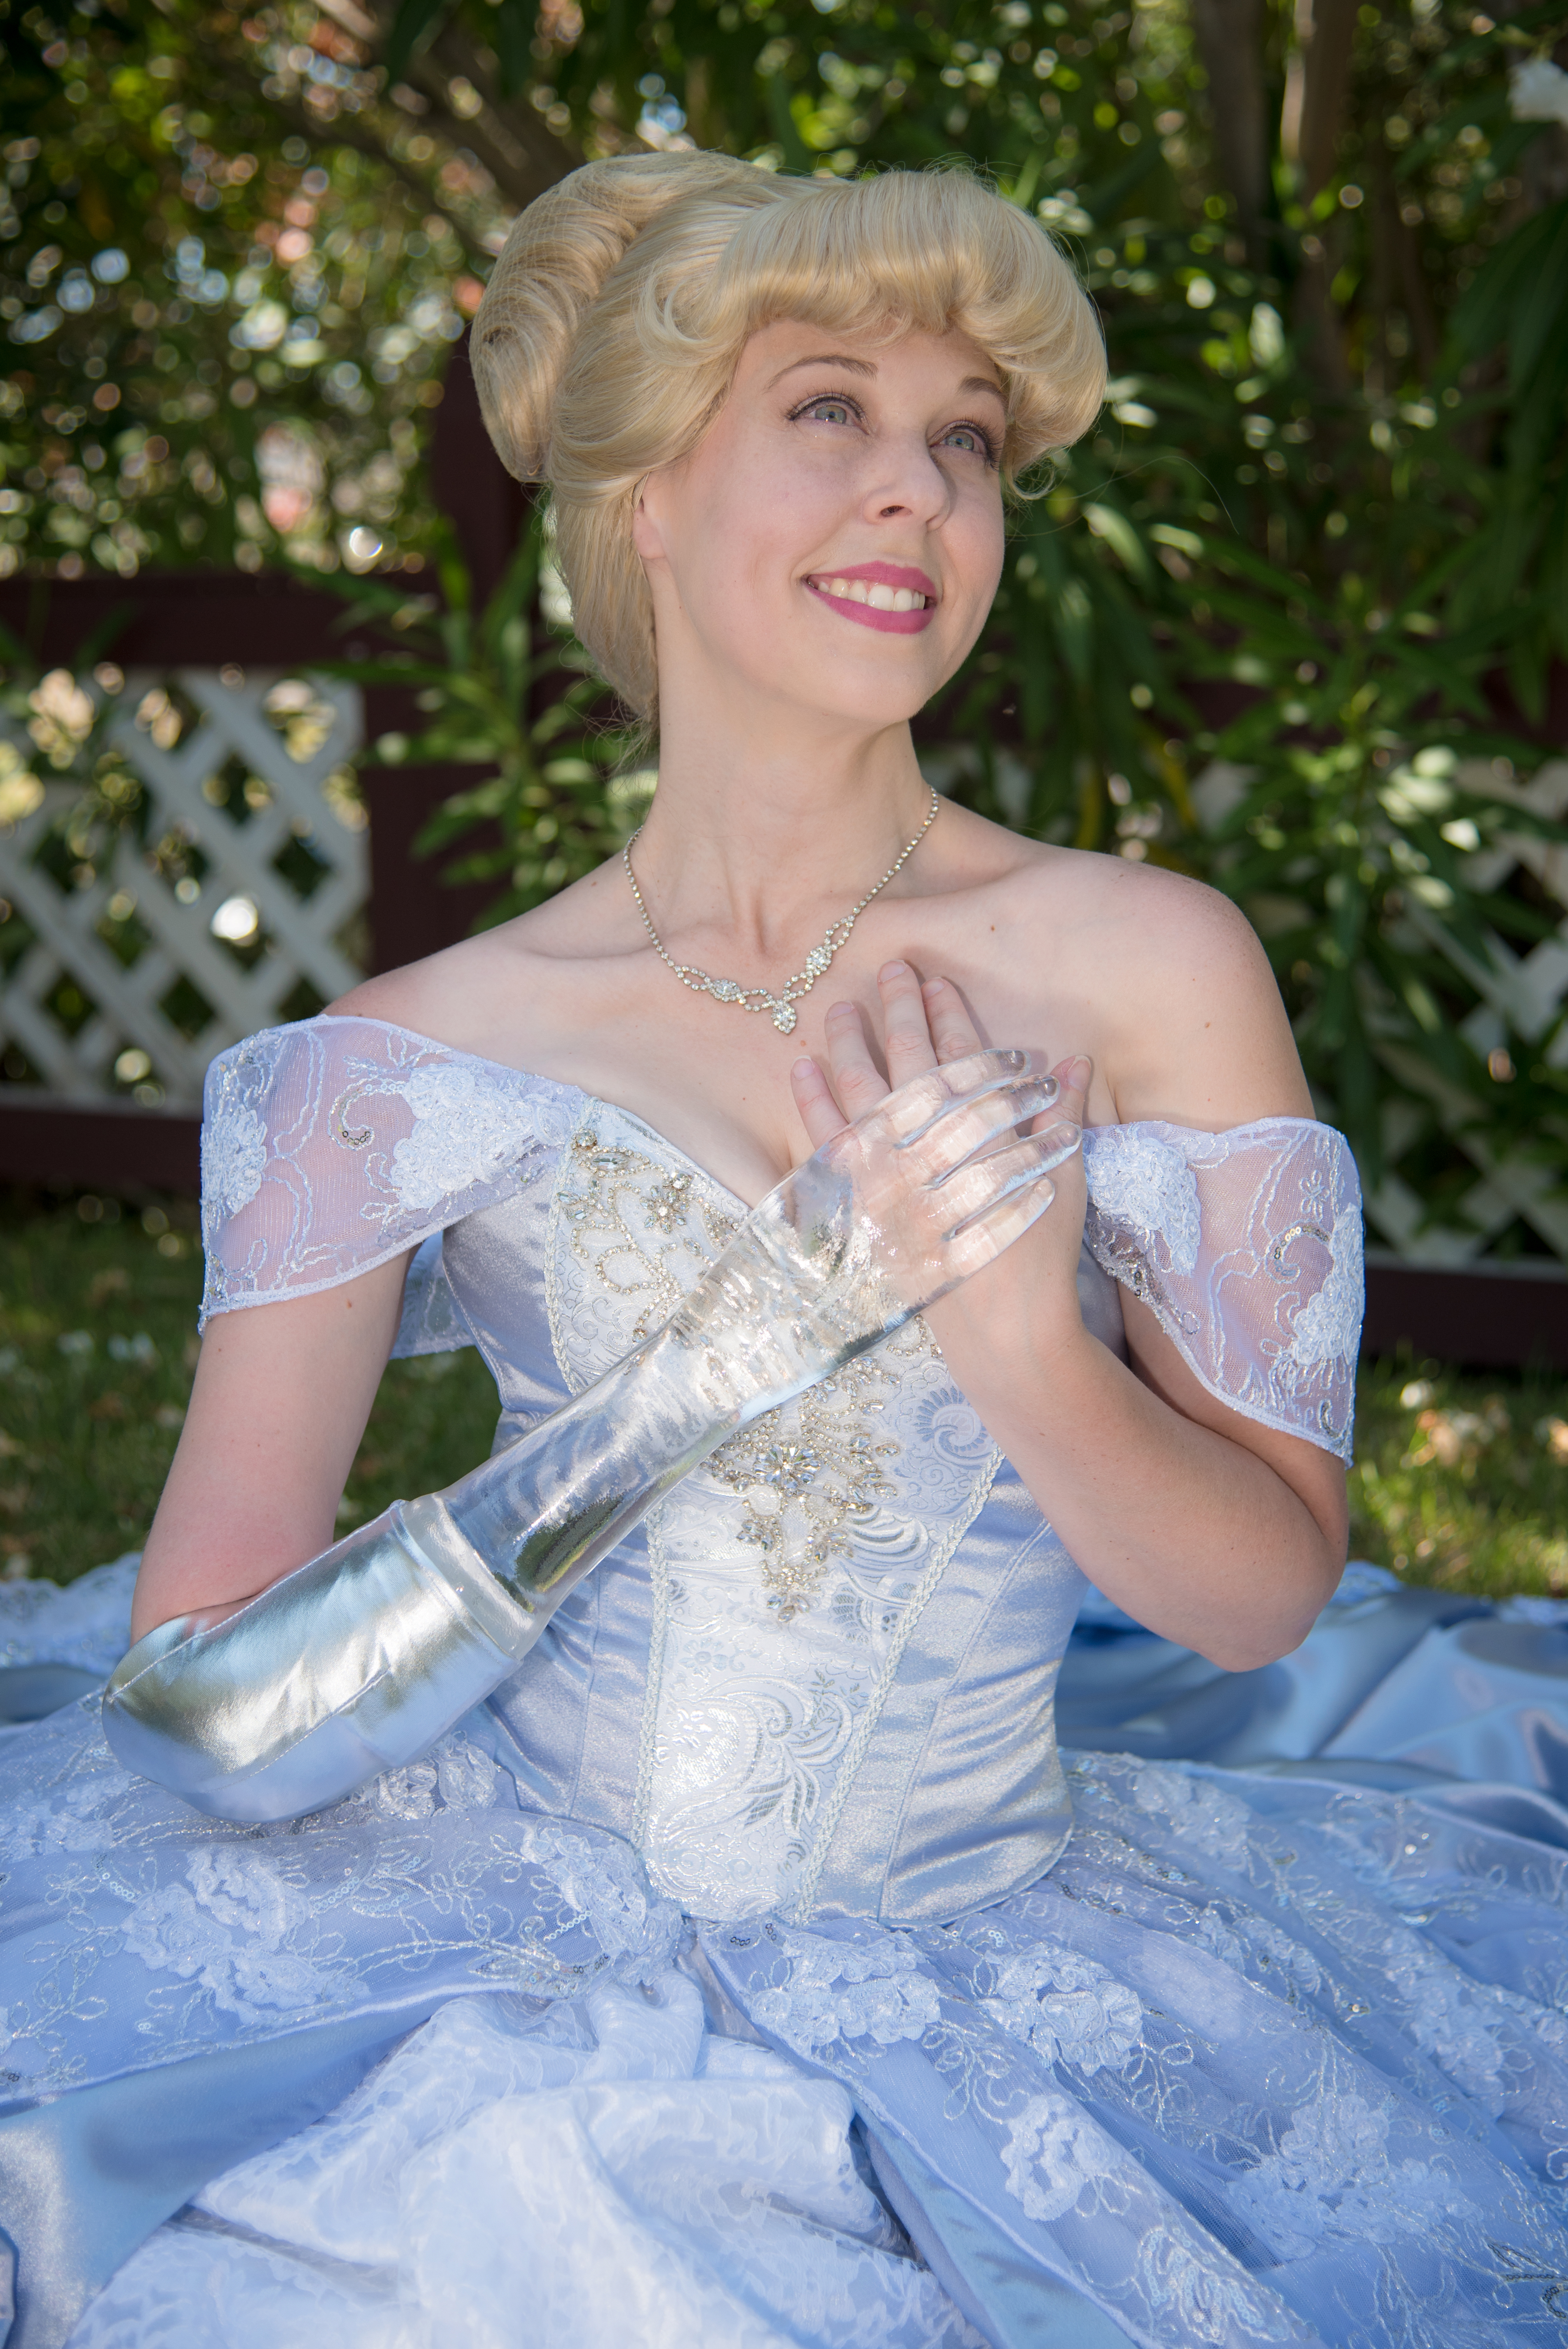 Mandy Pursley as Cinderella with a glass arm